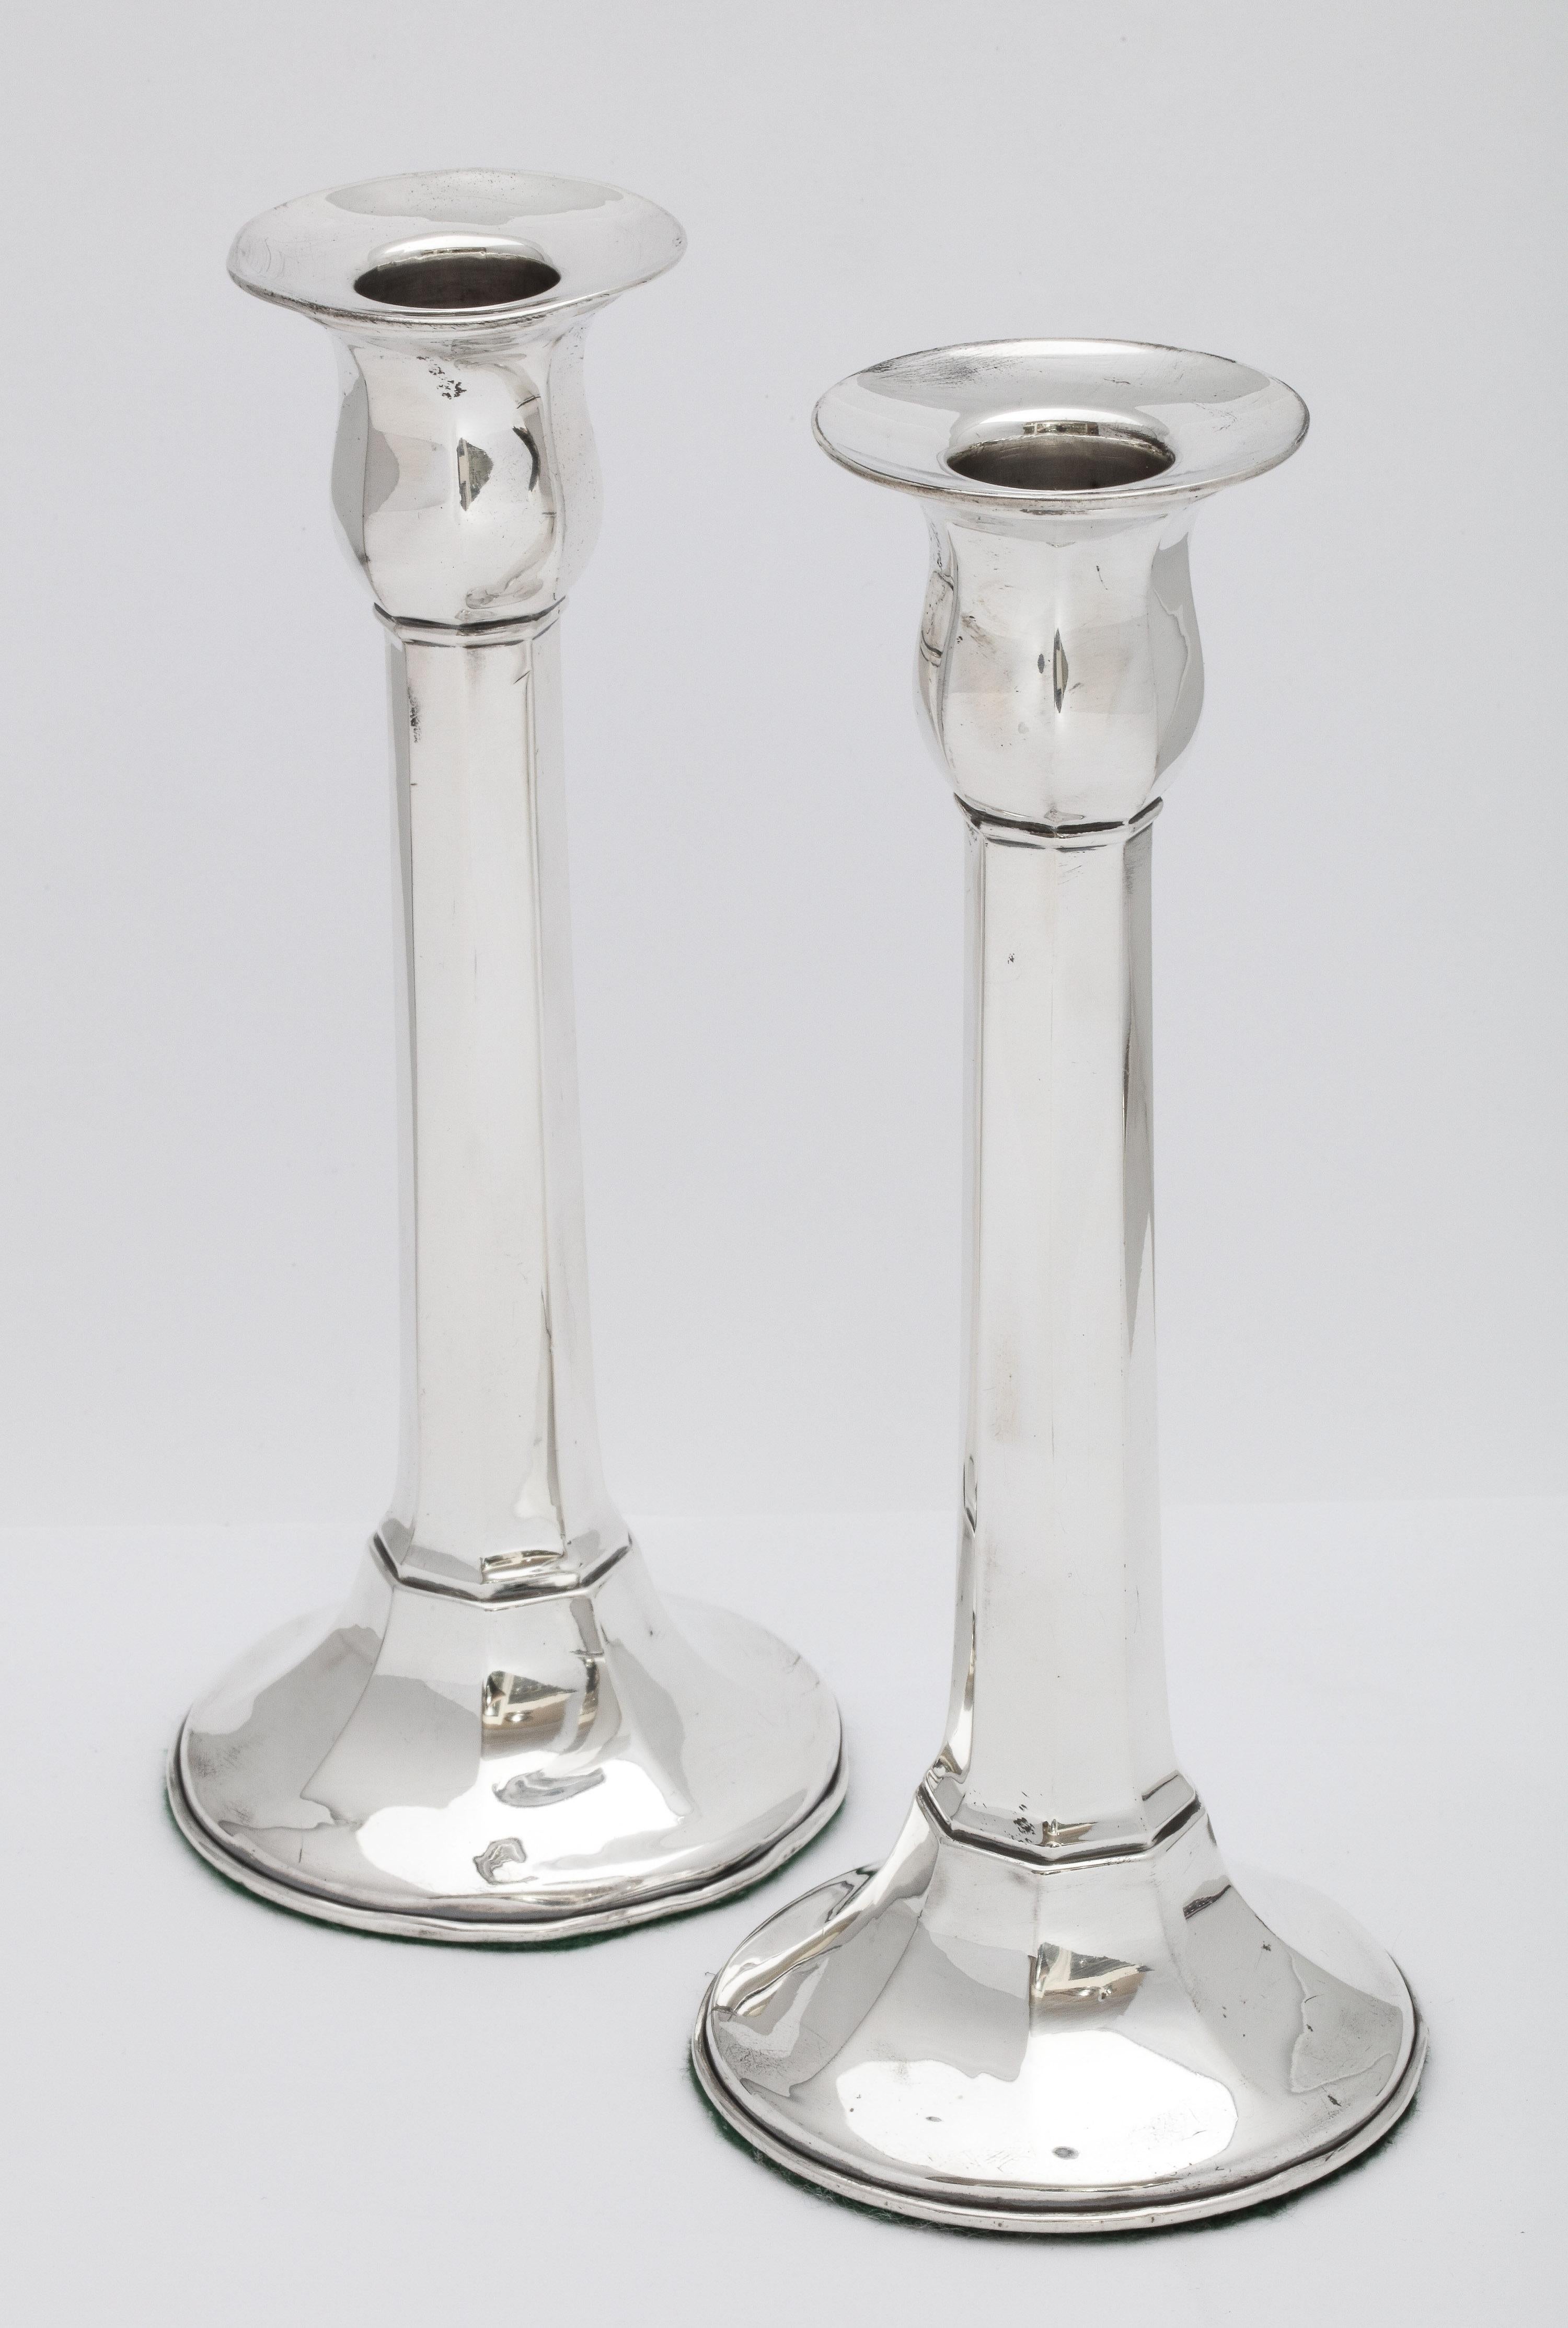 Art Deco Period Sterling Silver Column-Form Candlesticks 1